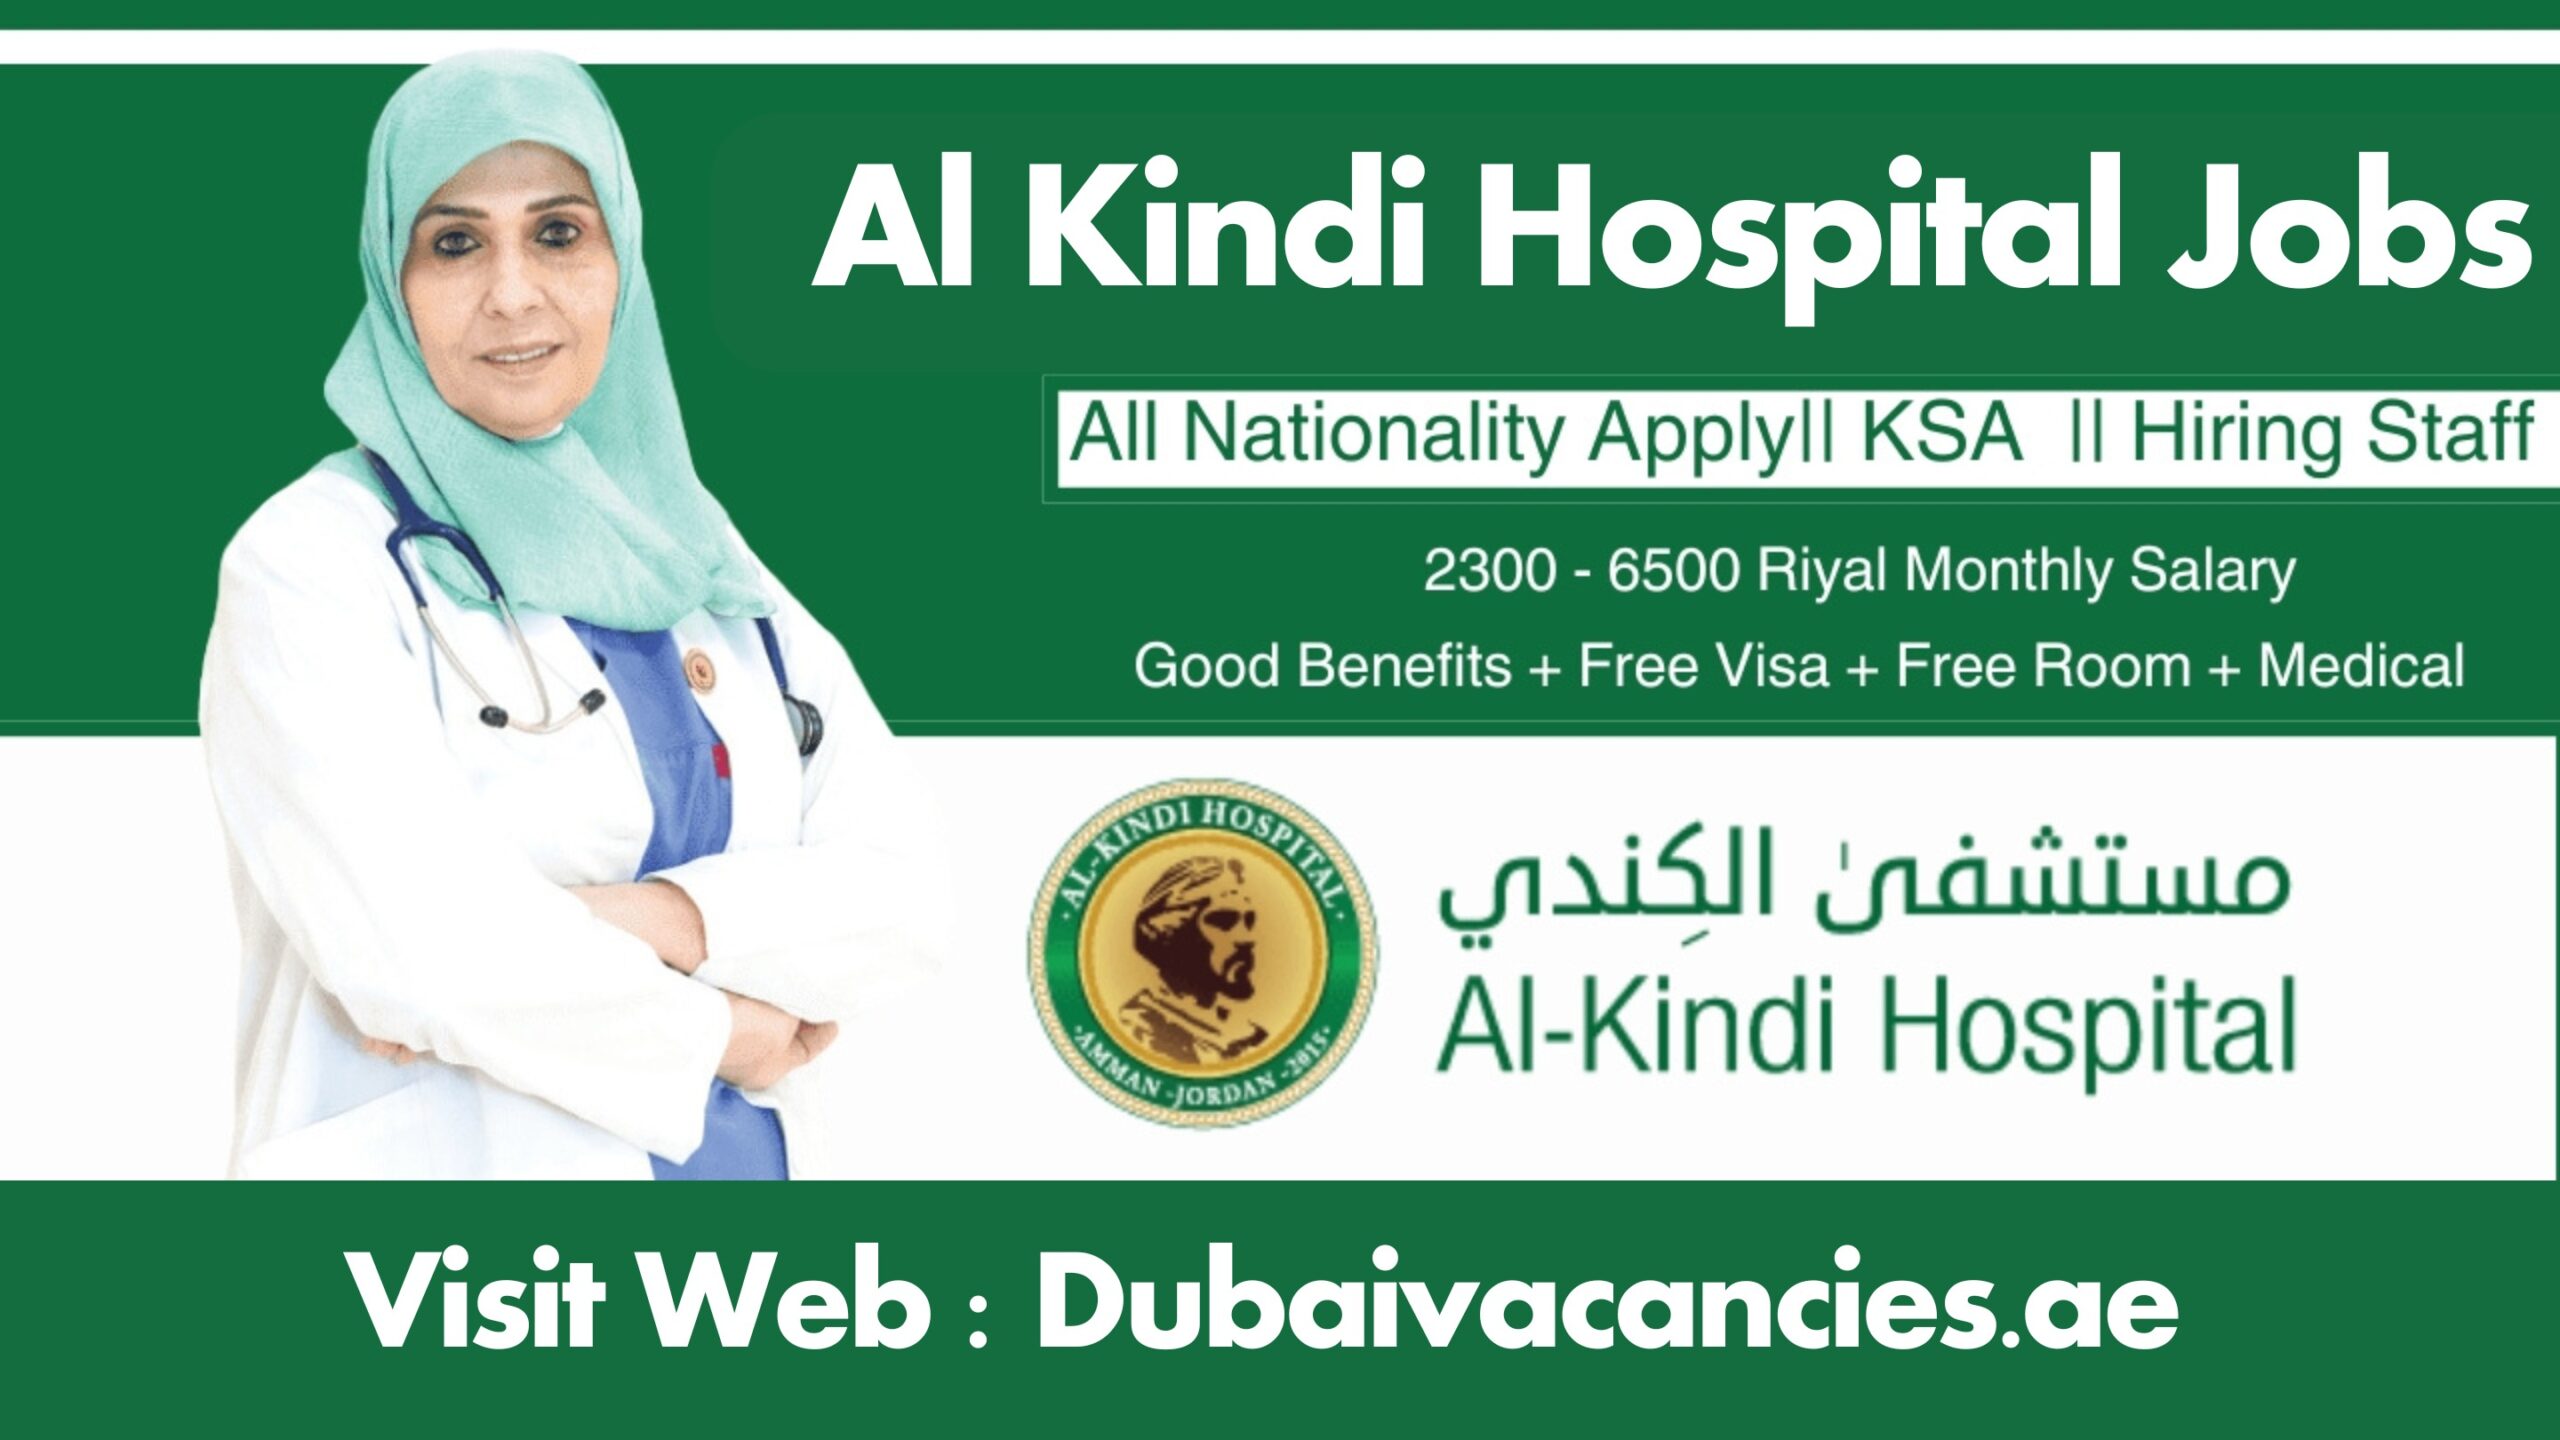 Al Kindi Hospital Jobs 